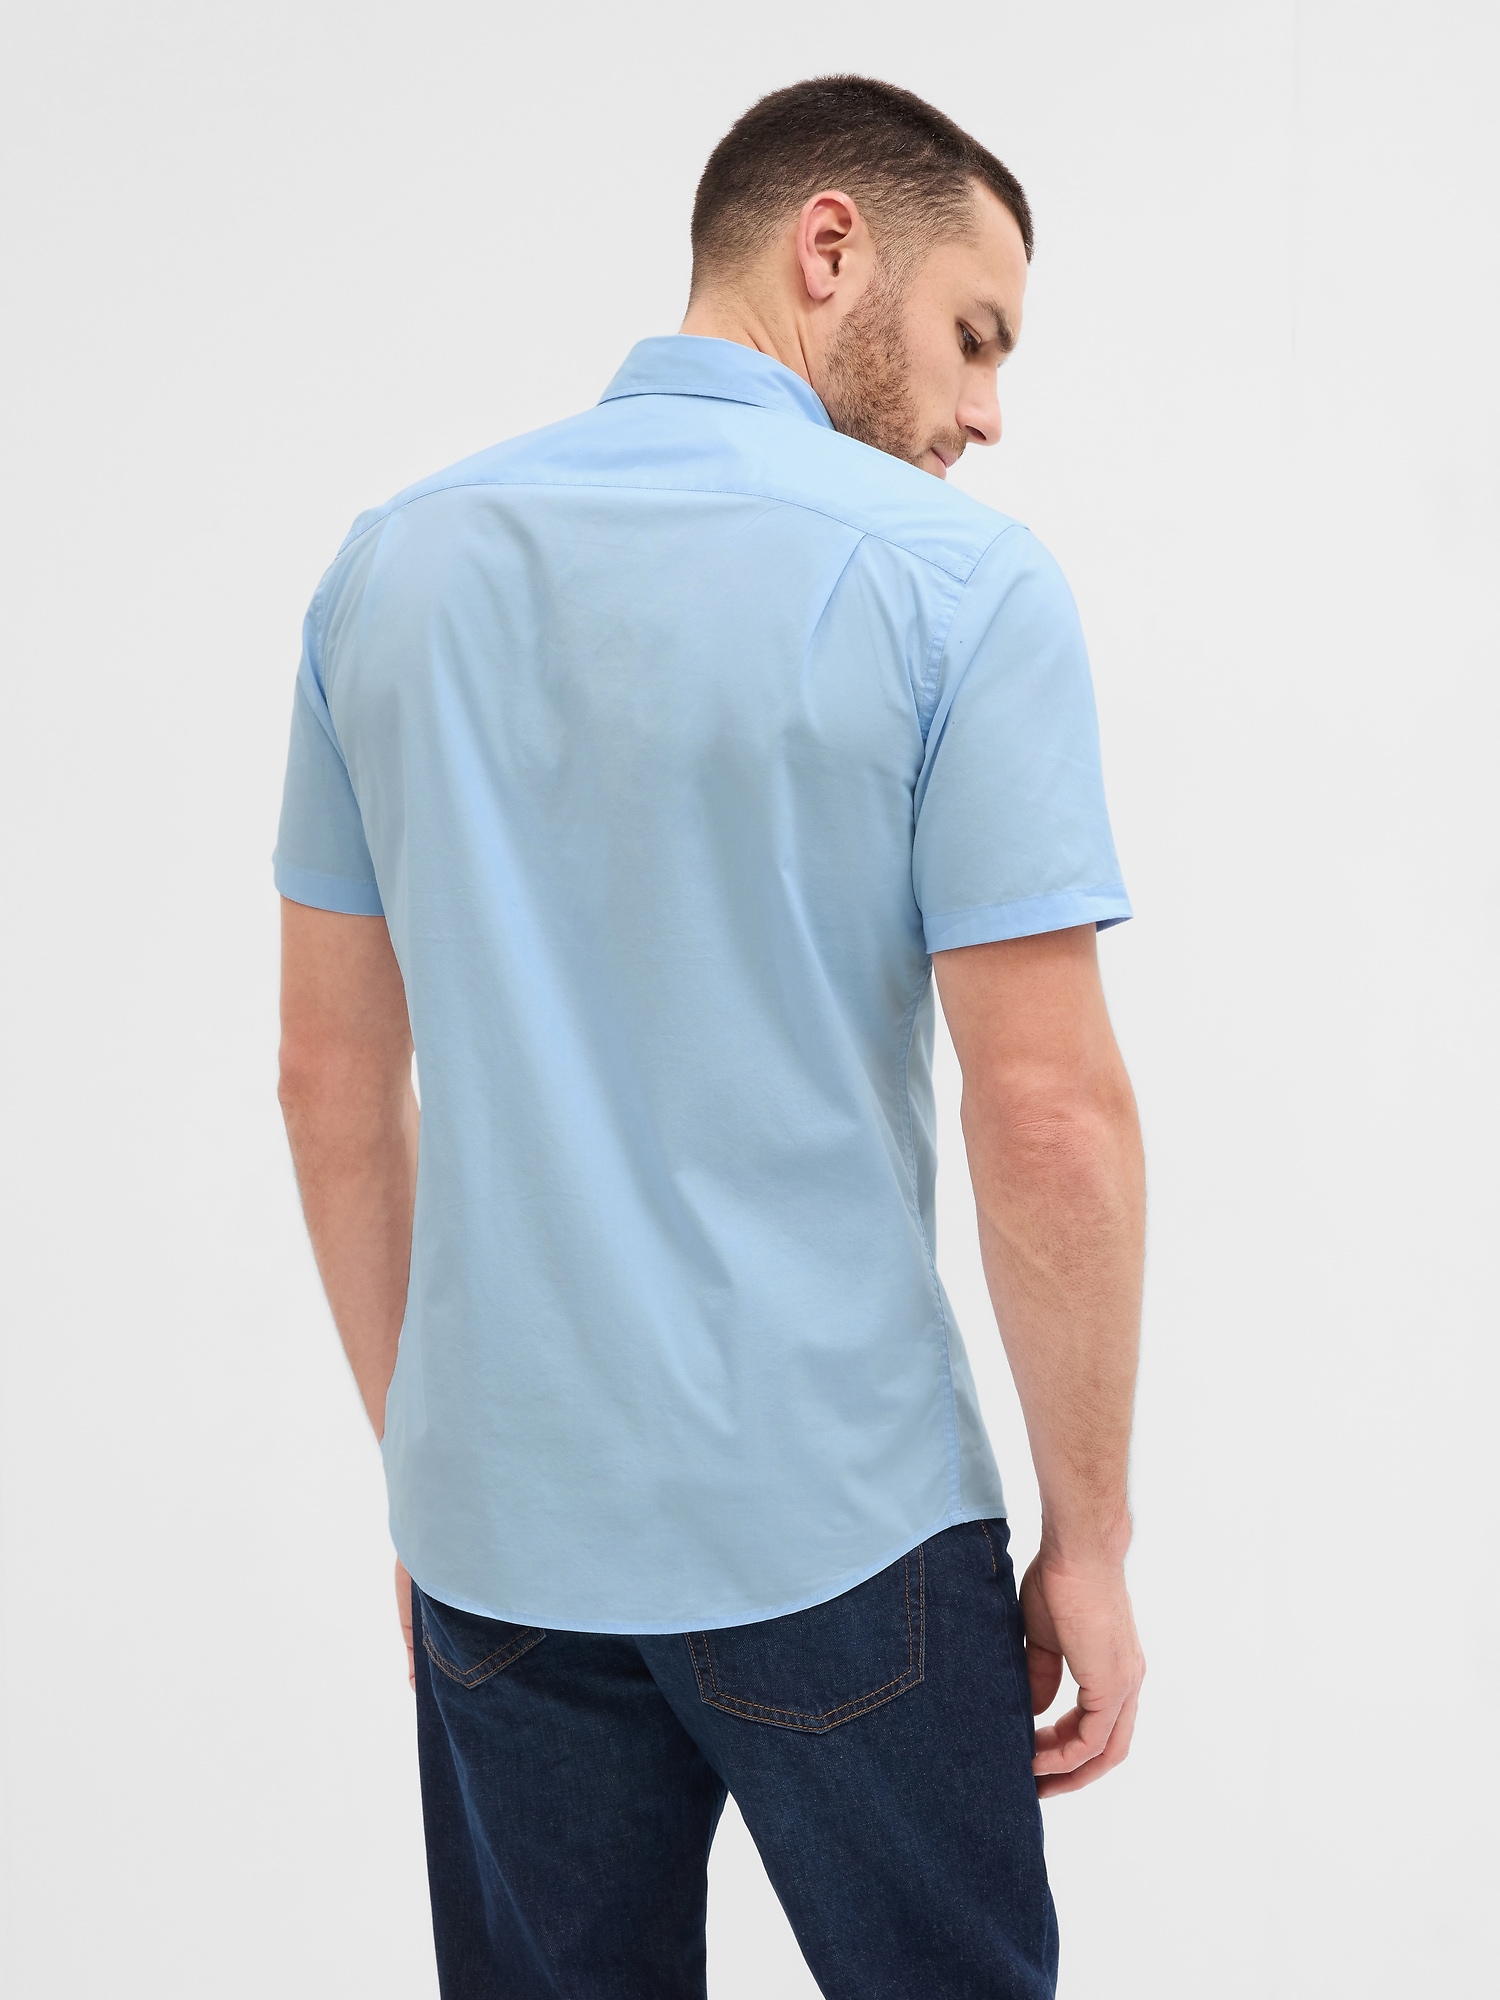 Stretch Poplin Shirt in Slim Fit | Gap Factory